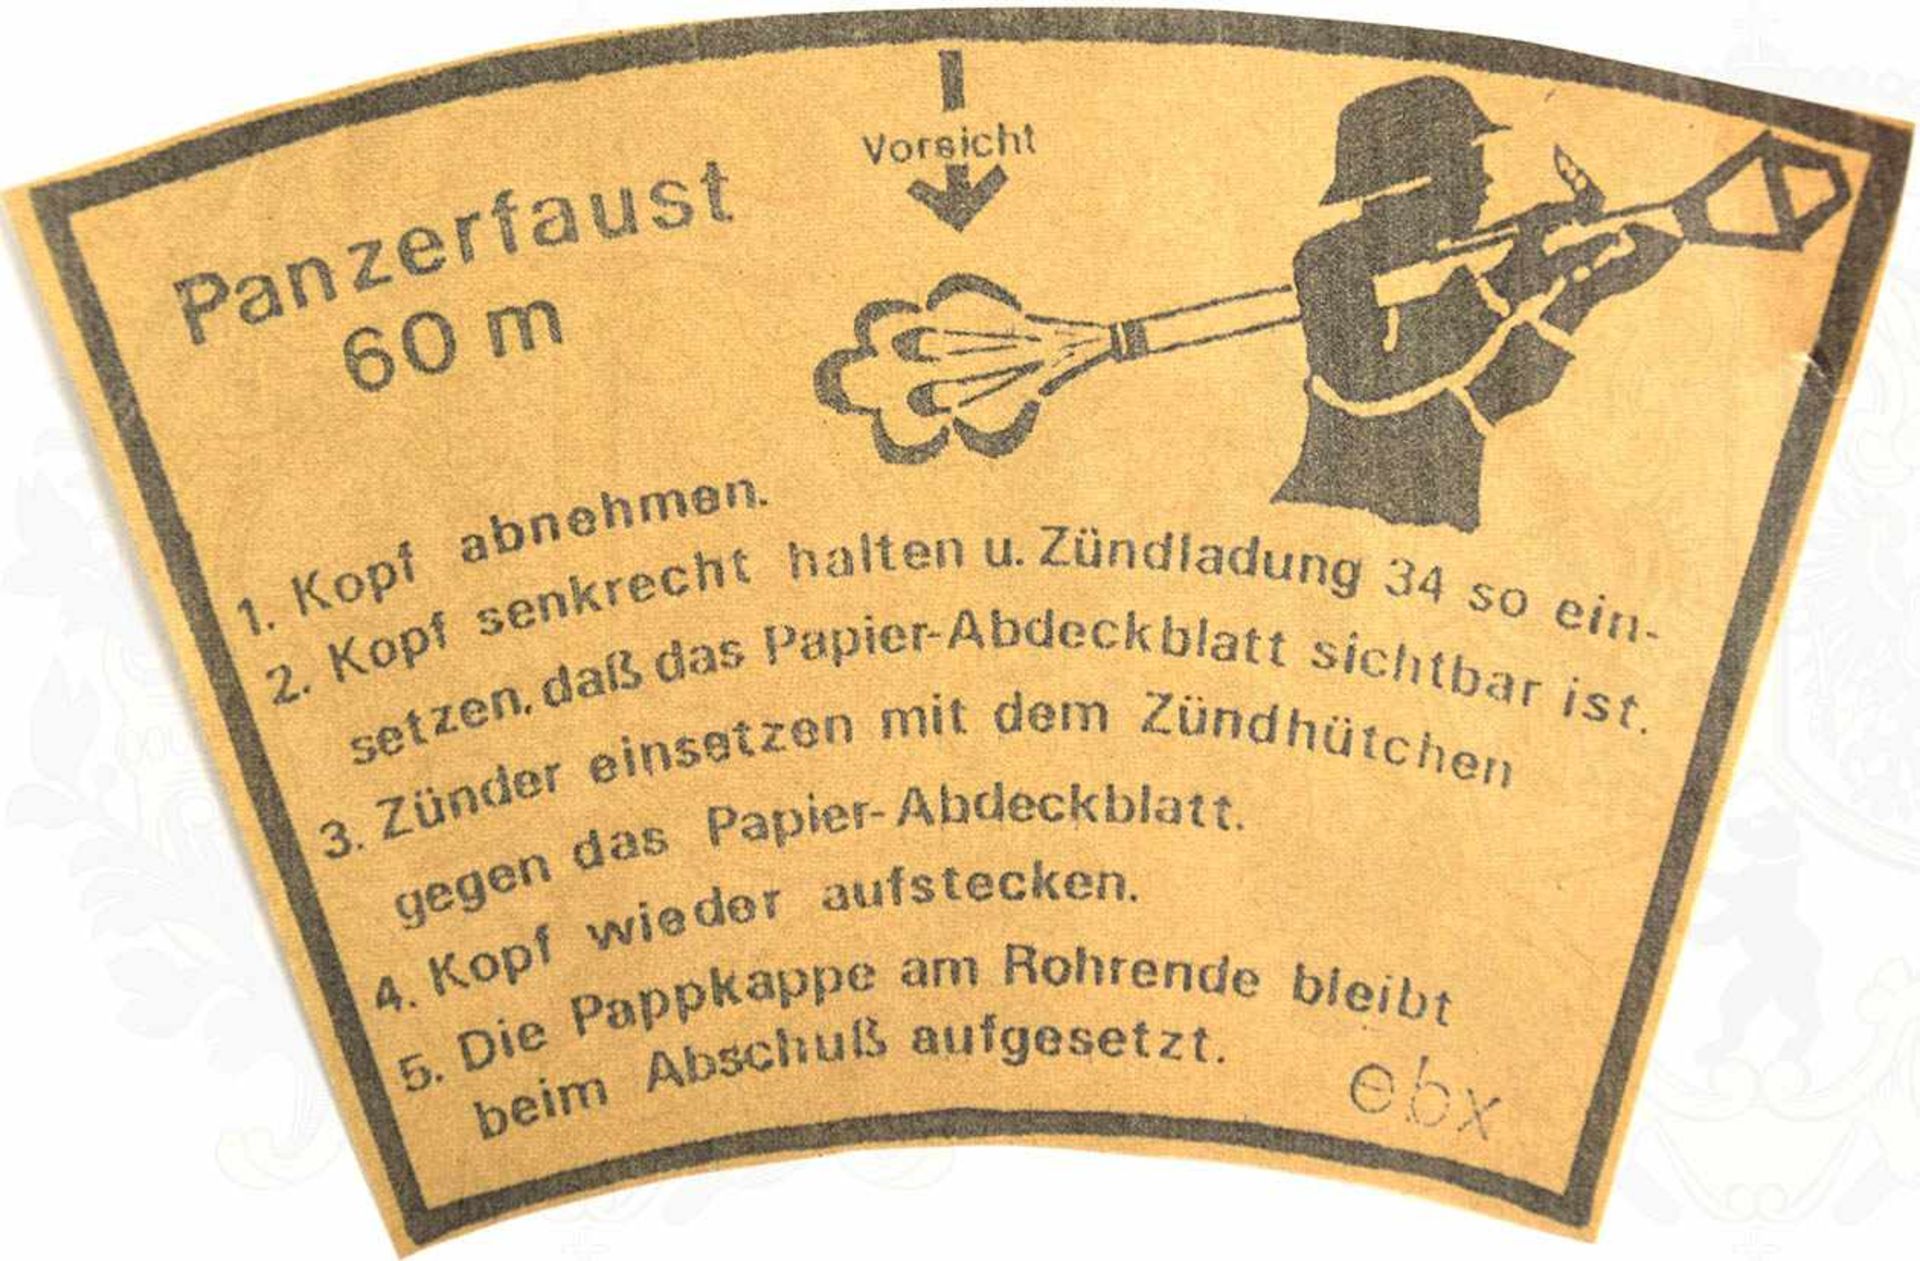 BESCHREIBUNG, Handhabung der Panzerfaust 60 m, “ebx“, Sammleranfertigung, brauner Papier-